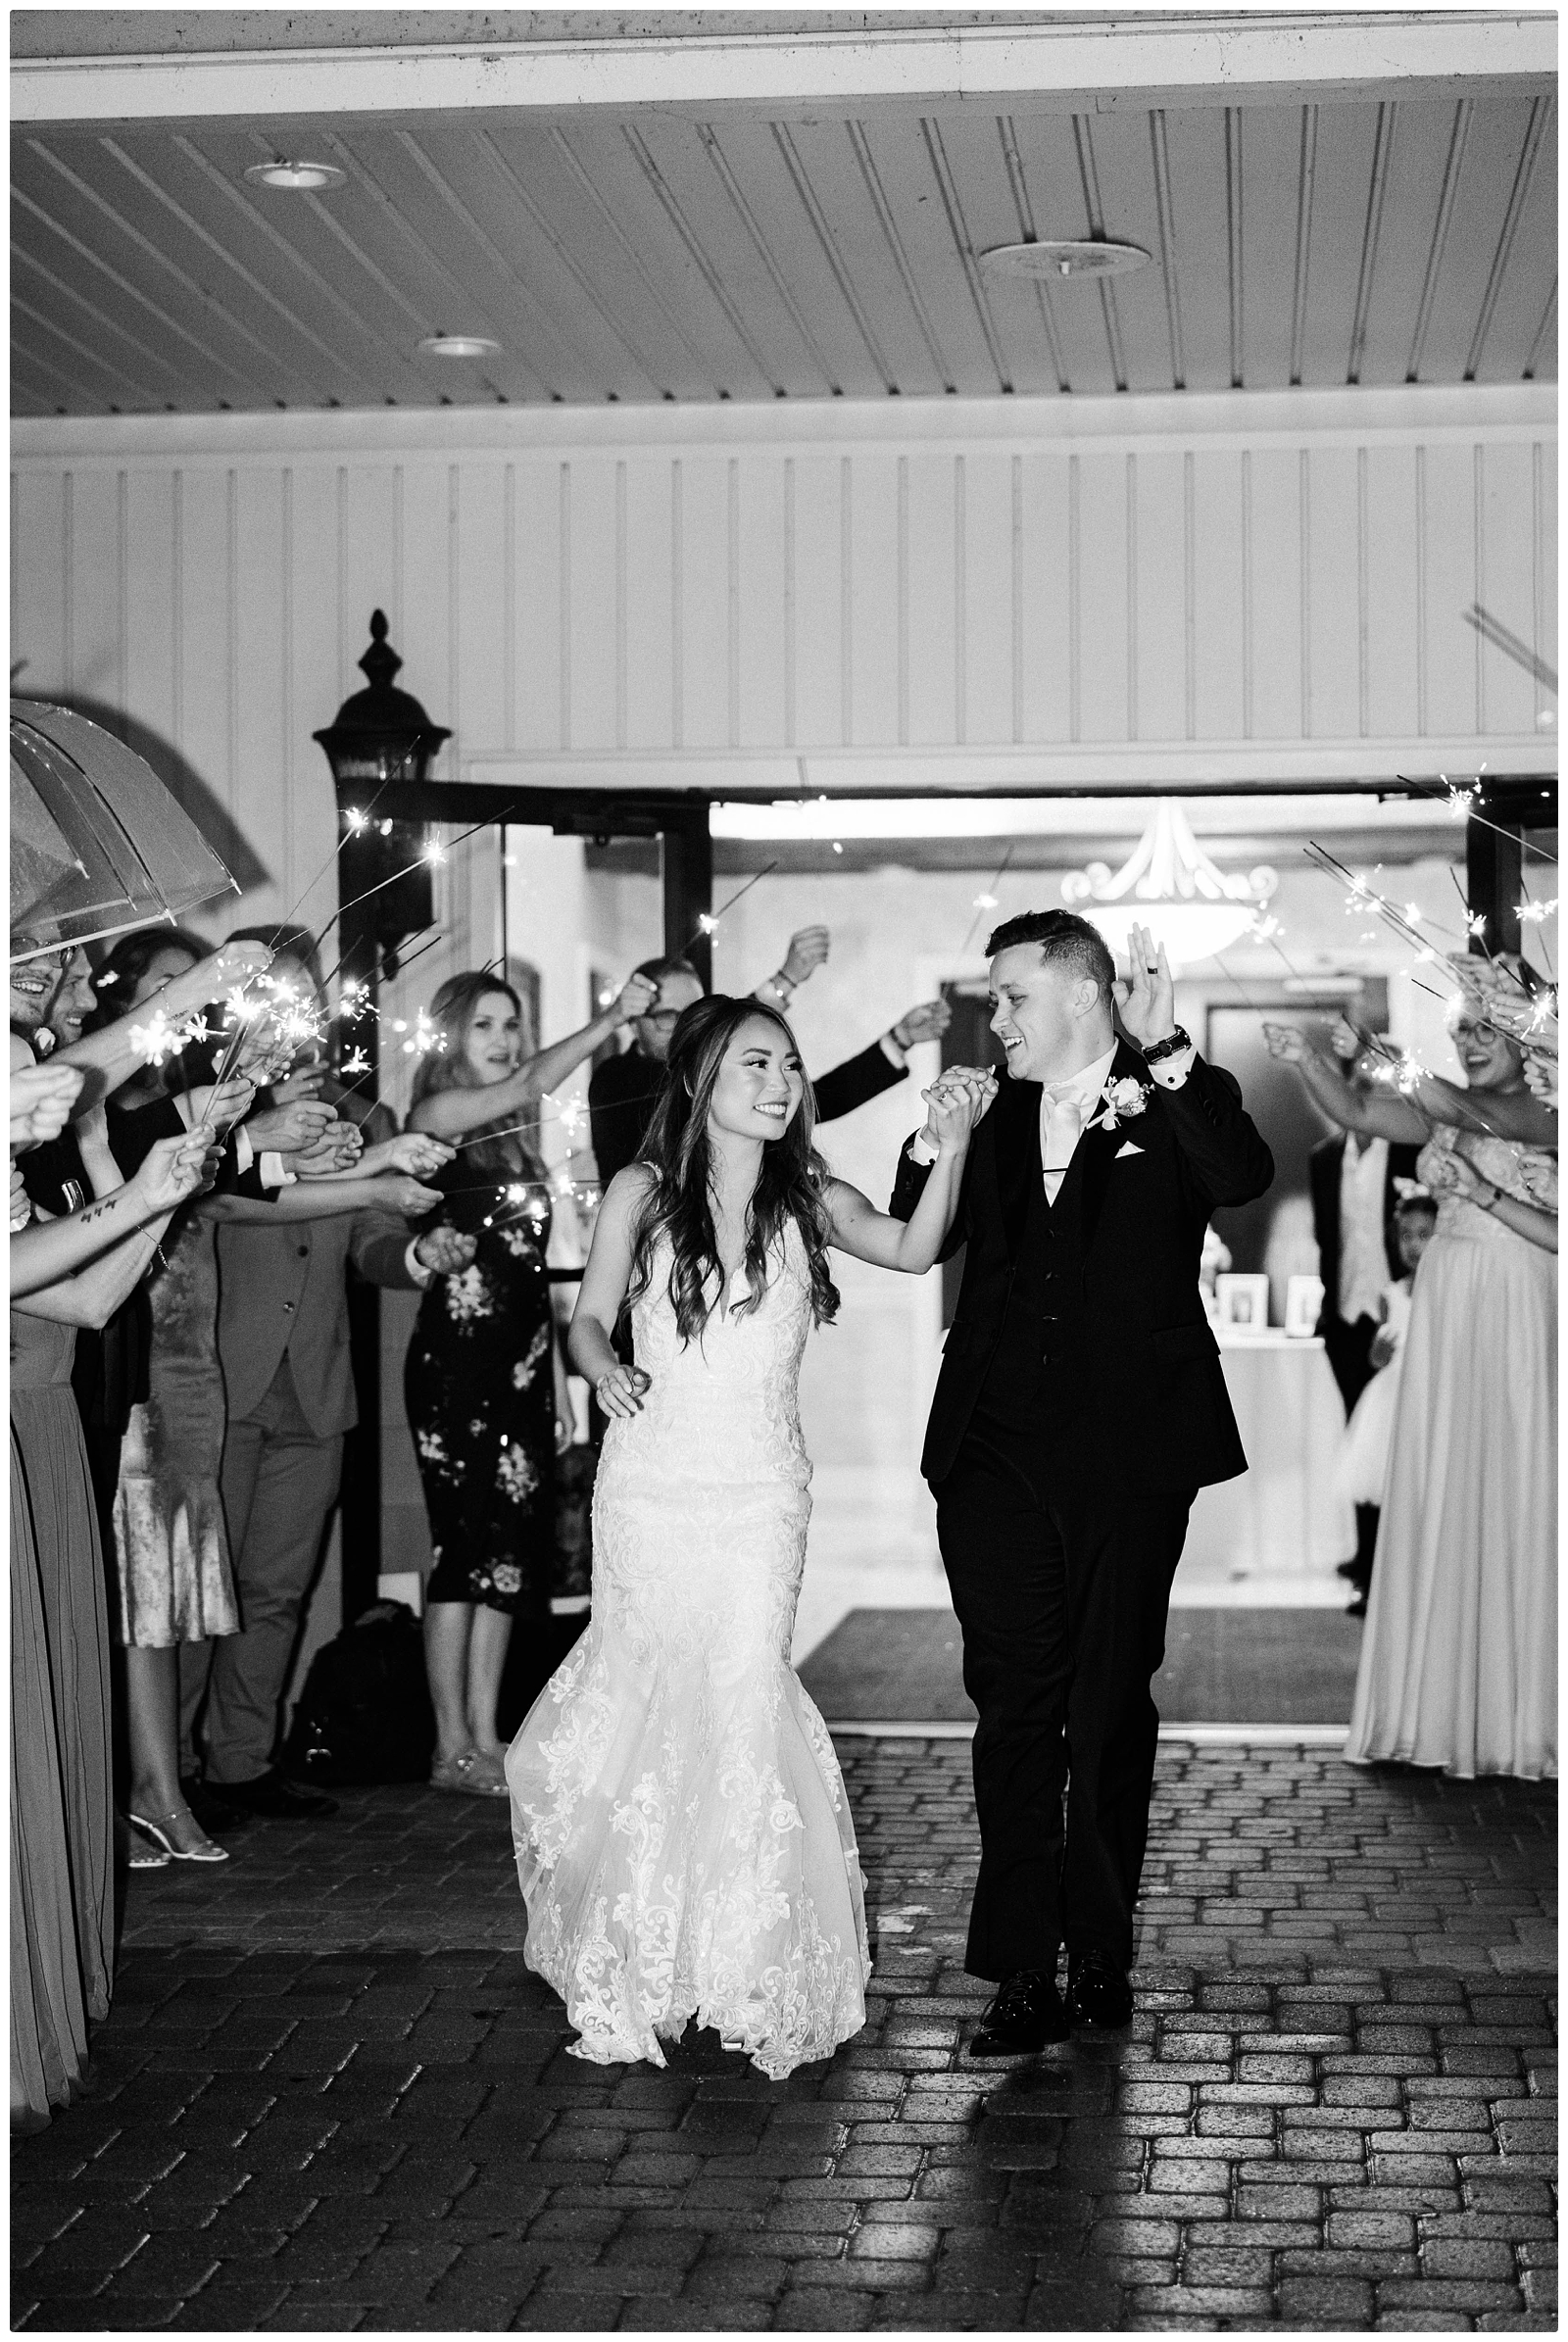 sparkler exit at wedding reception